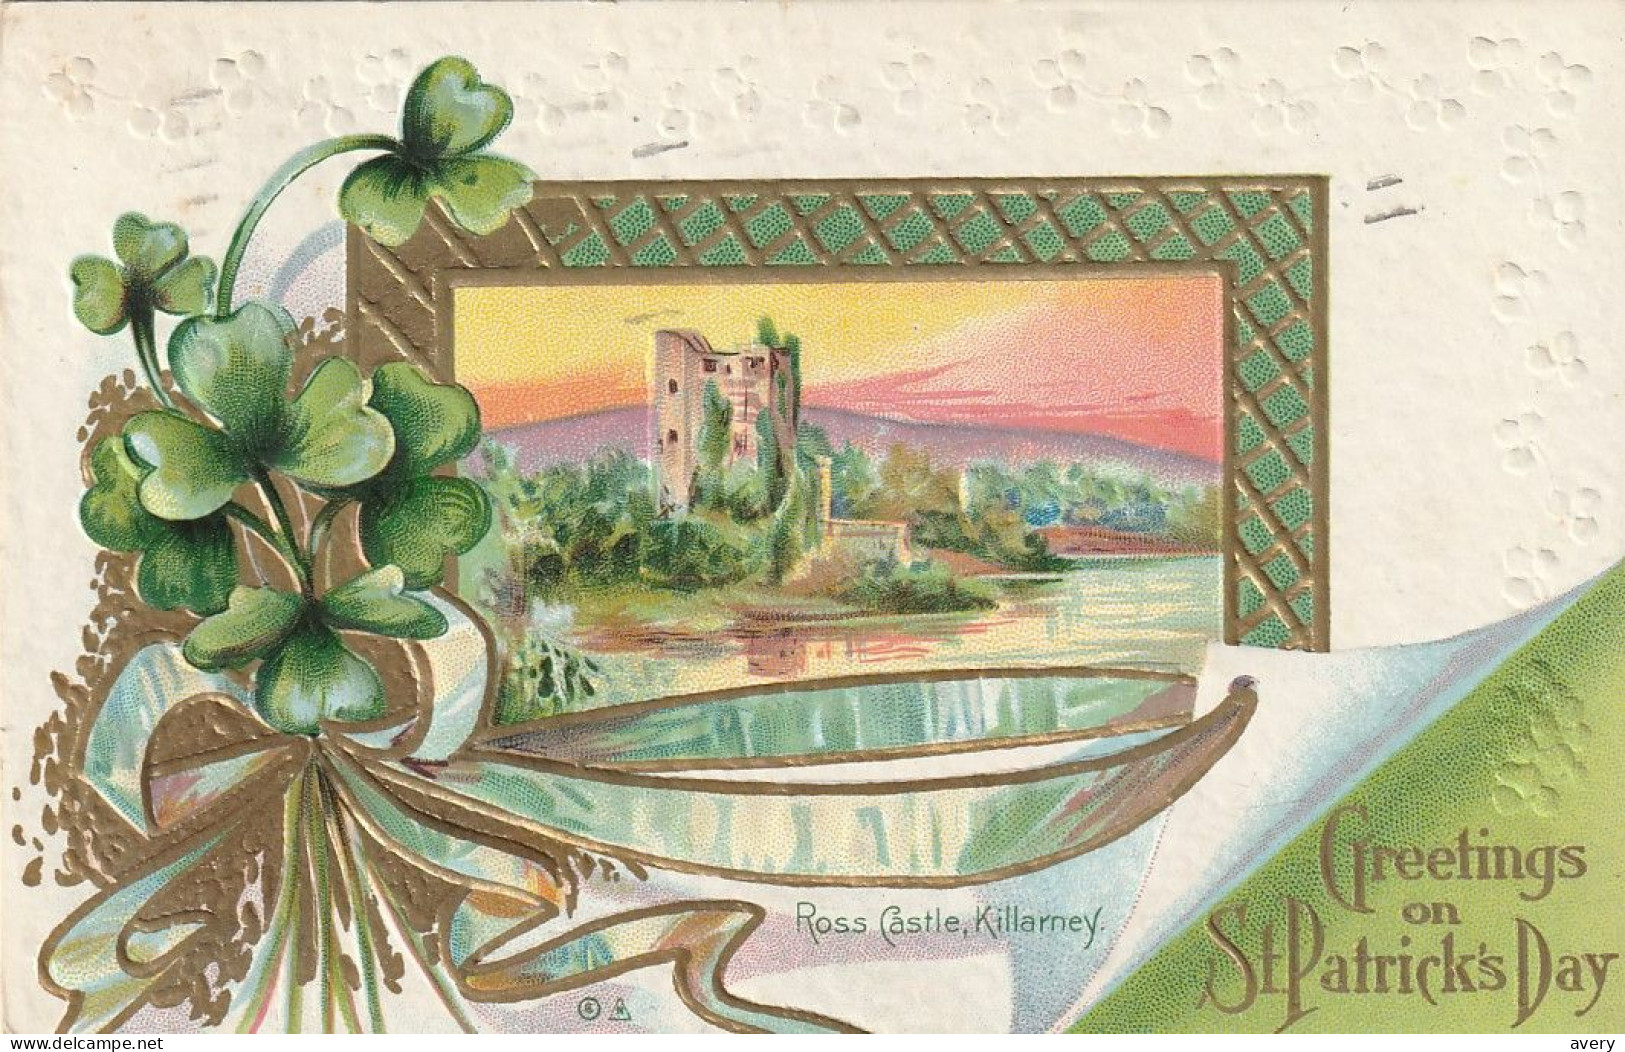 Greetings On St. Patrick's Day  Ross Castle, Killarney  .  .  .  . - Saint-Patrick's Day